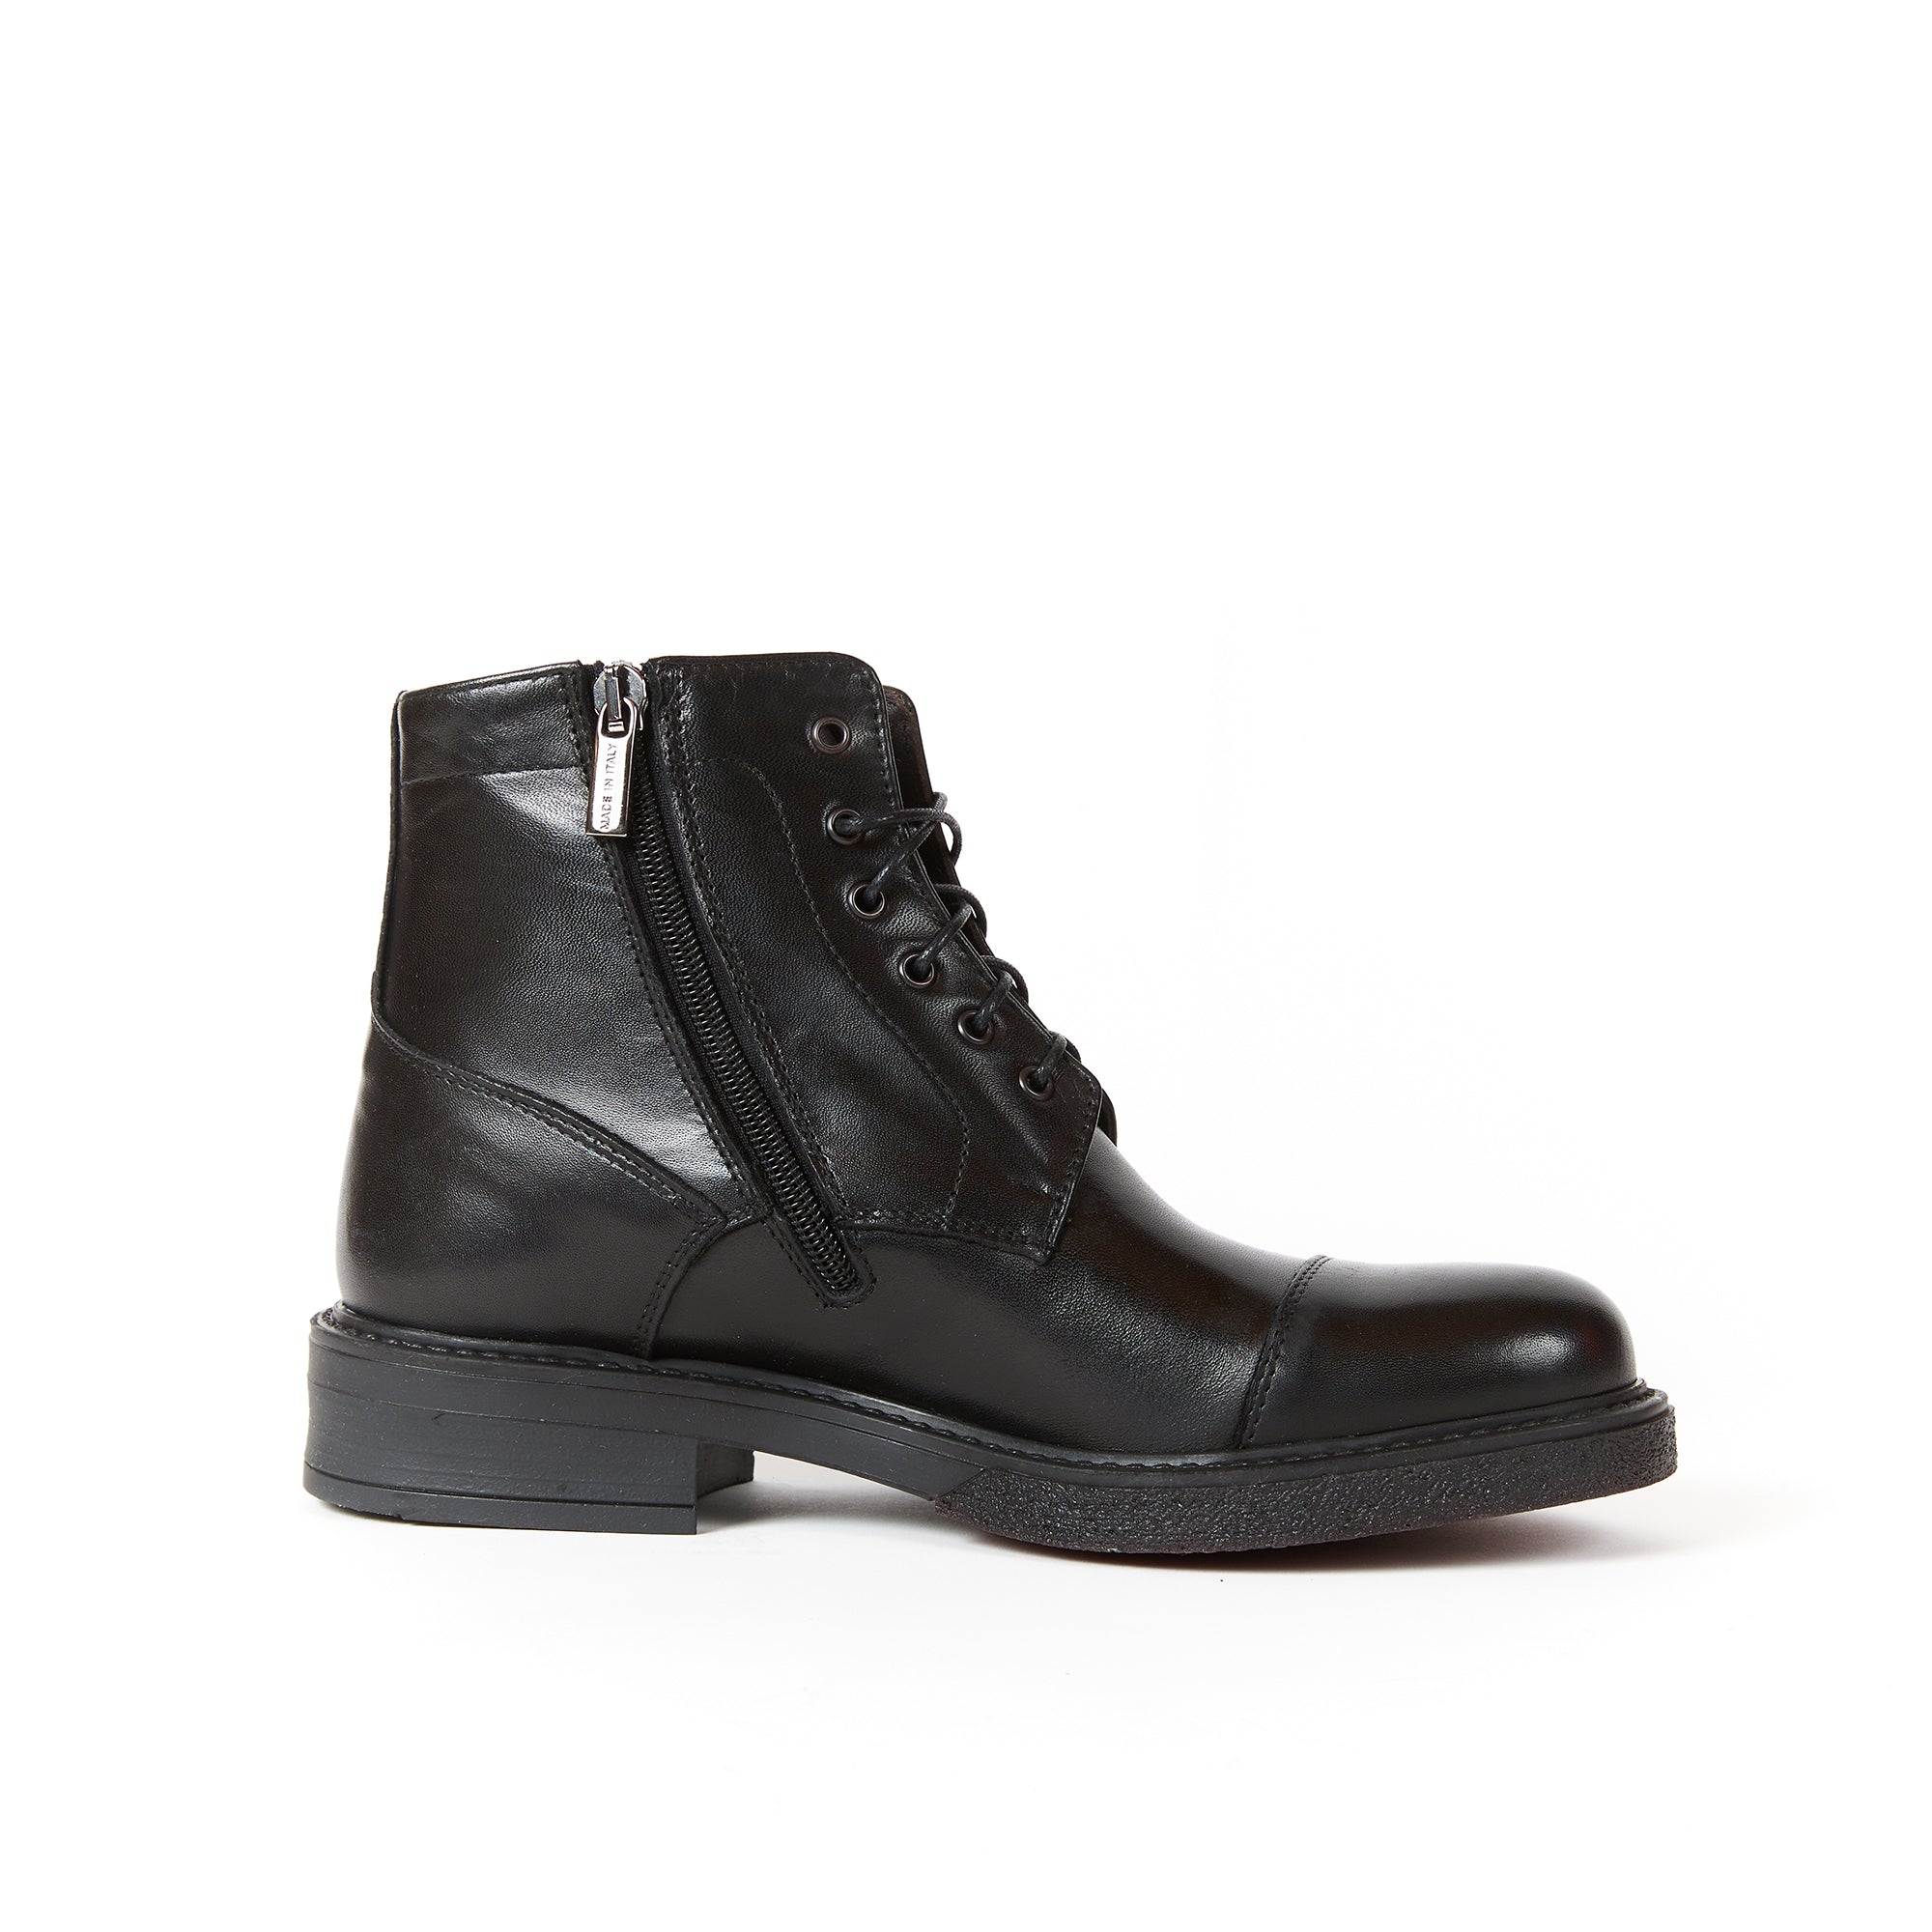 Toe cap laced boot black